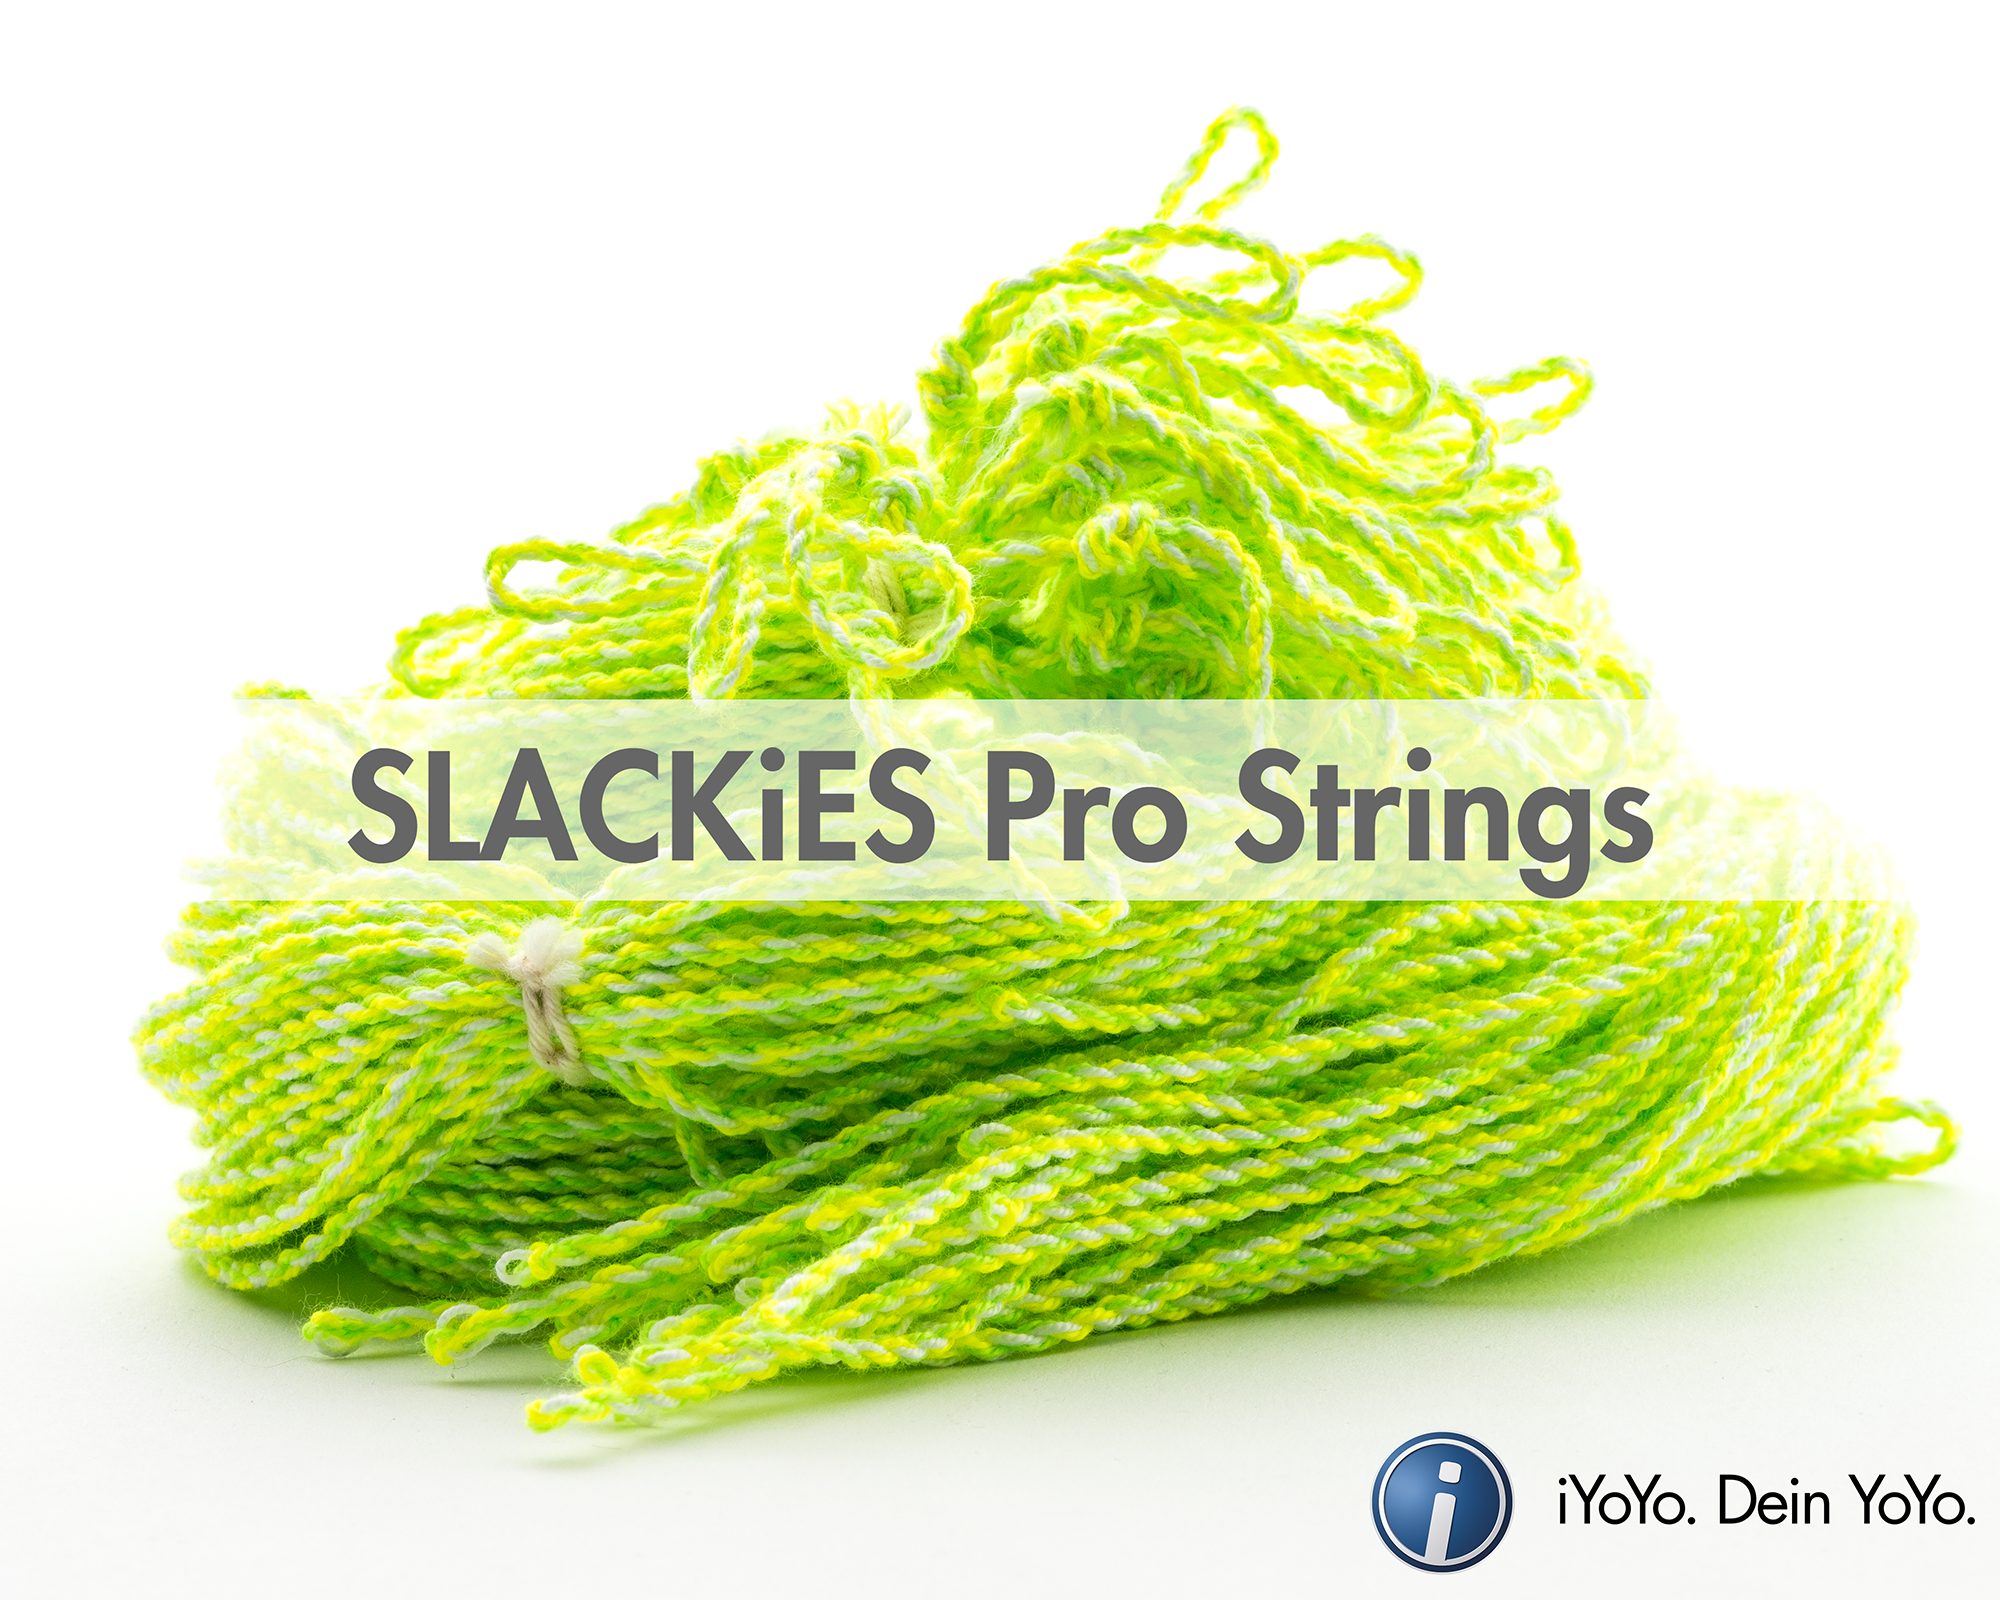 SLACKiES Pro Strings (50 pcs) - by iYoYo